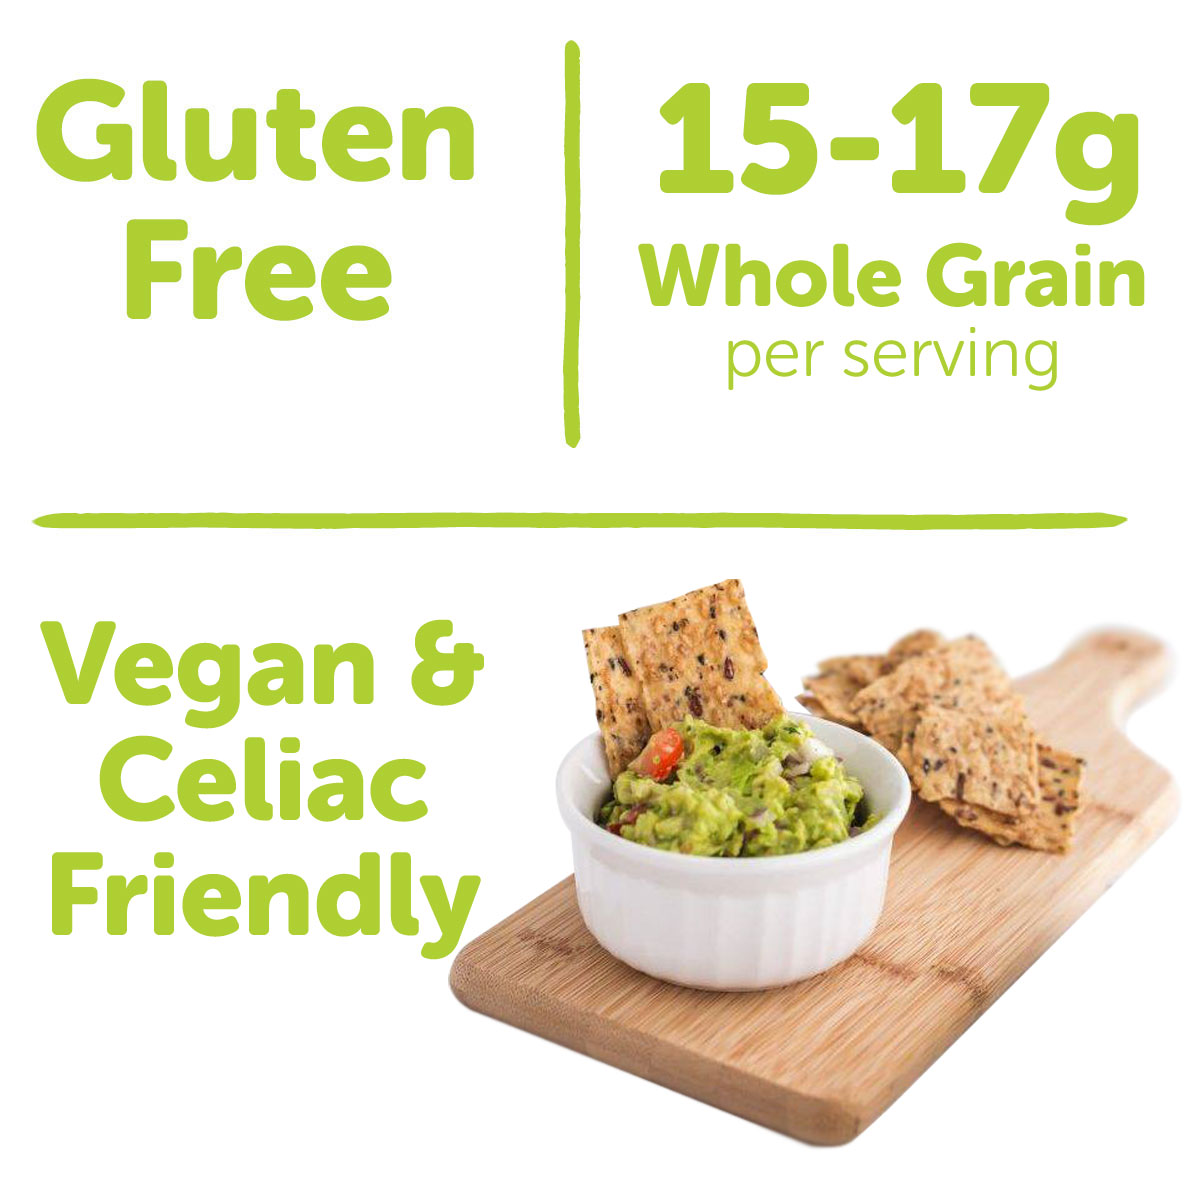 Gluten Free / 15-17g Whole Grain per serving / Vegan and Celiac Friendly